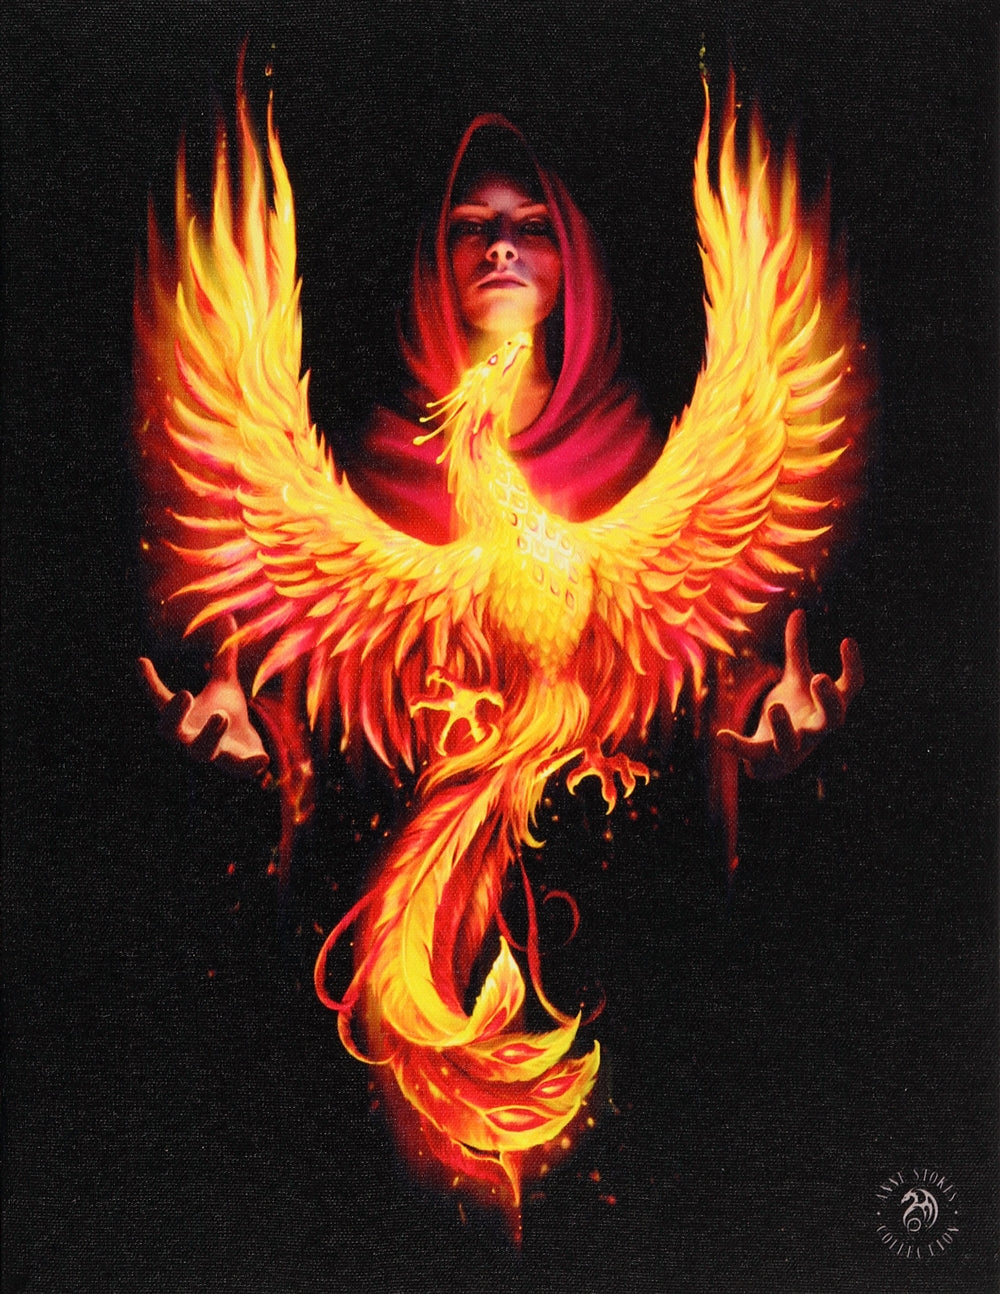 Phoenix Rising Canvas Print